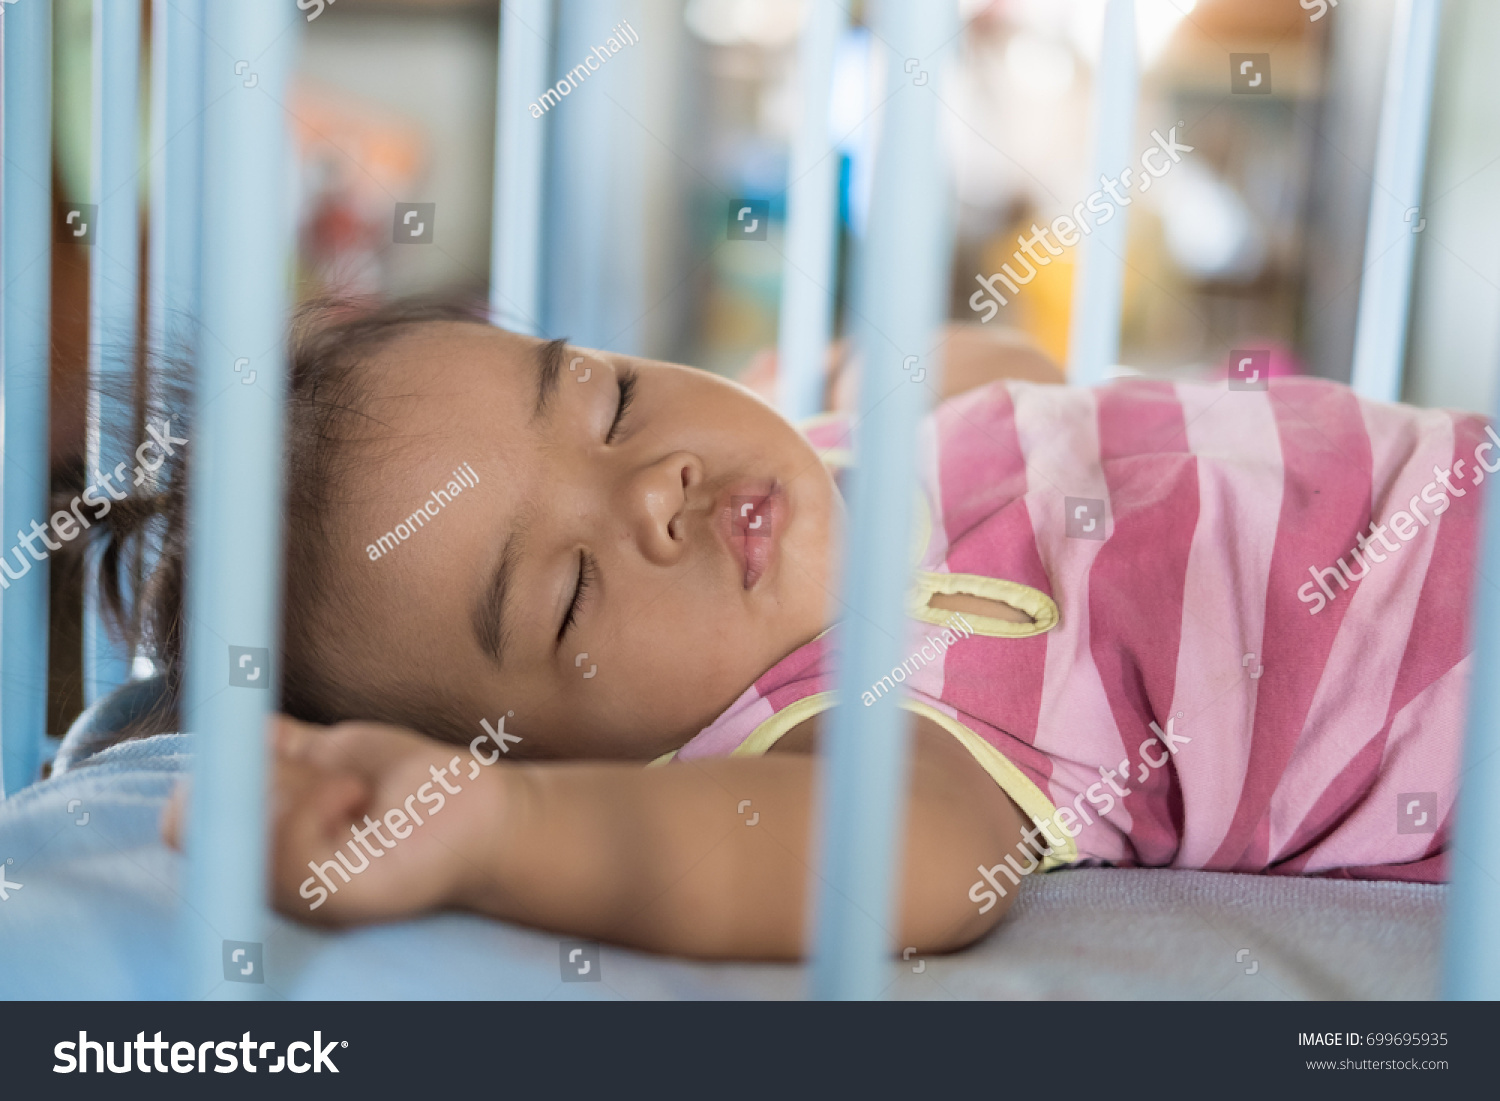 Baby girl is sleeping in baby cot. #699695935